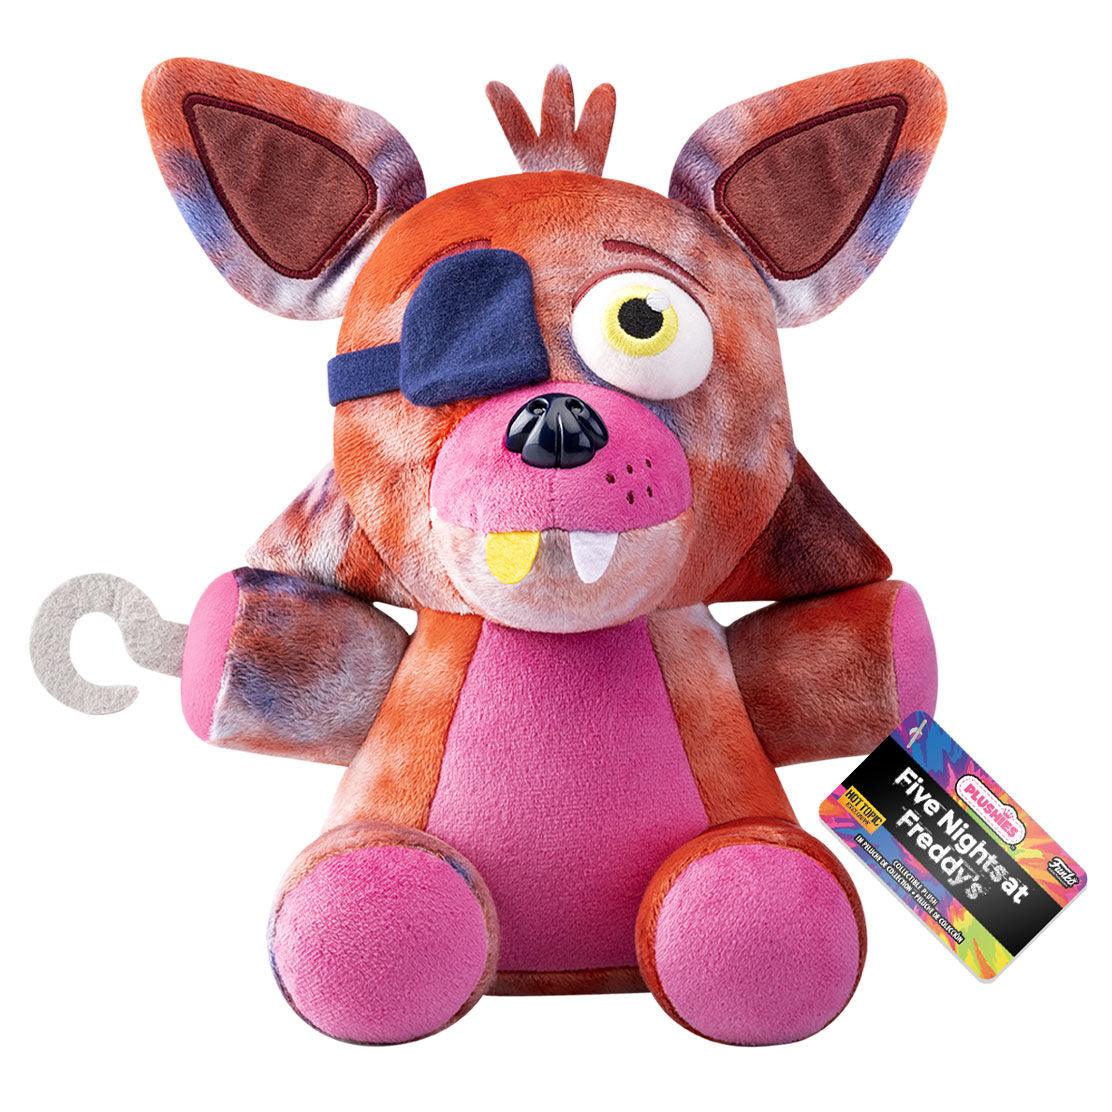 Funko Plush: Five Nights at Freddy's - Balloon Foxy 7-Inch Plush